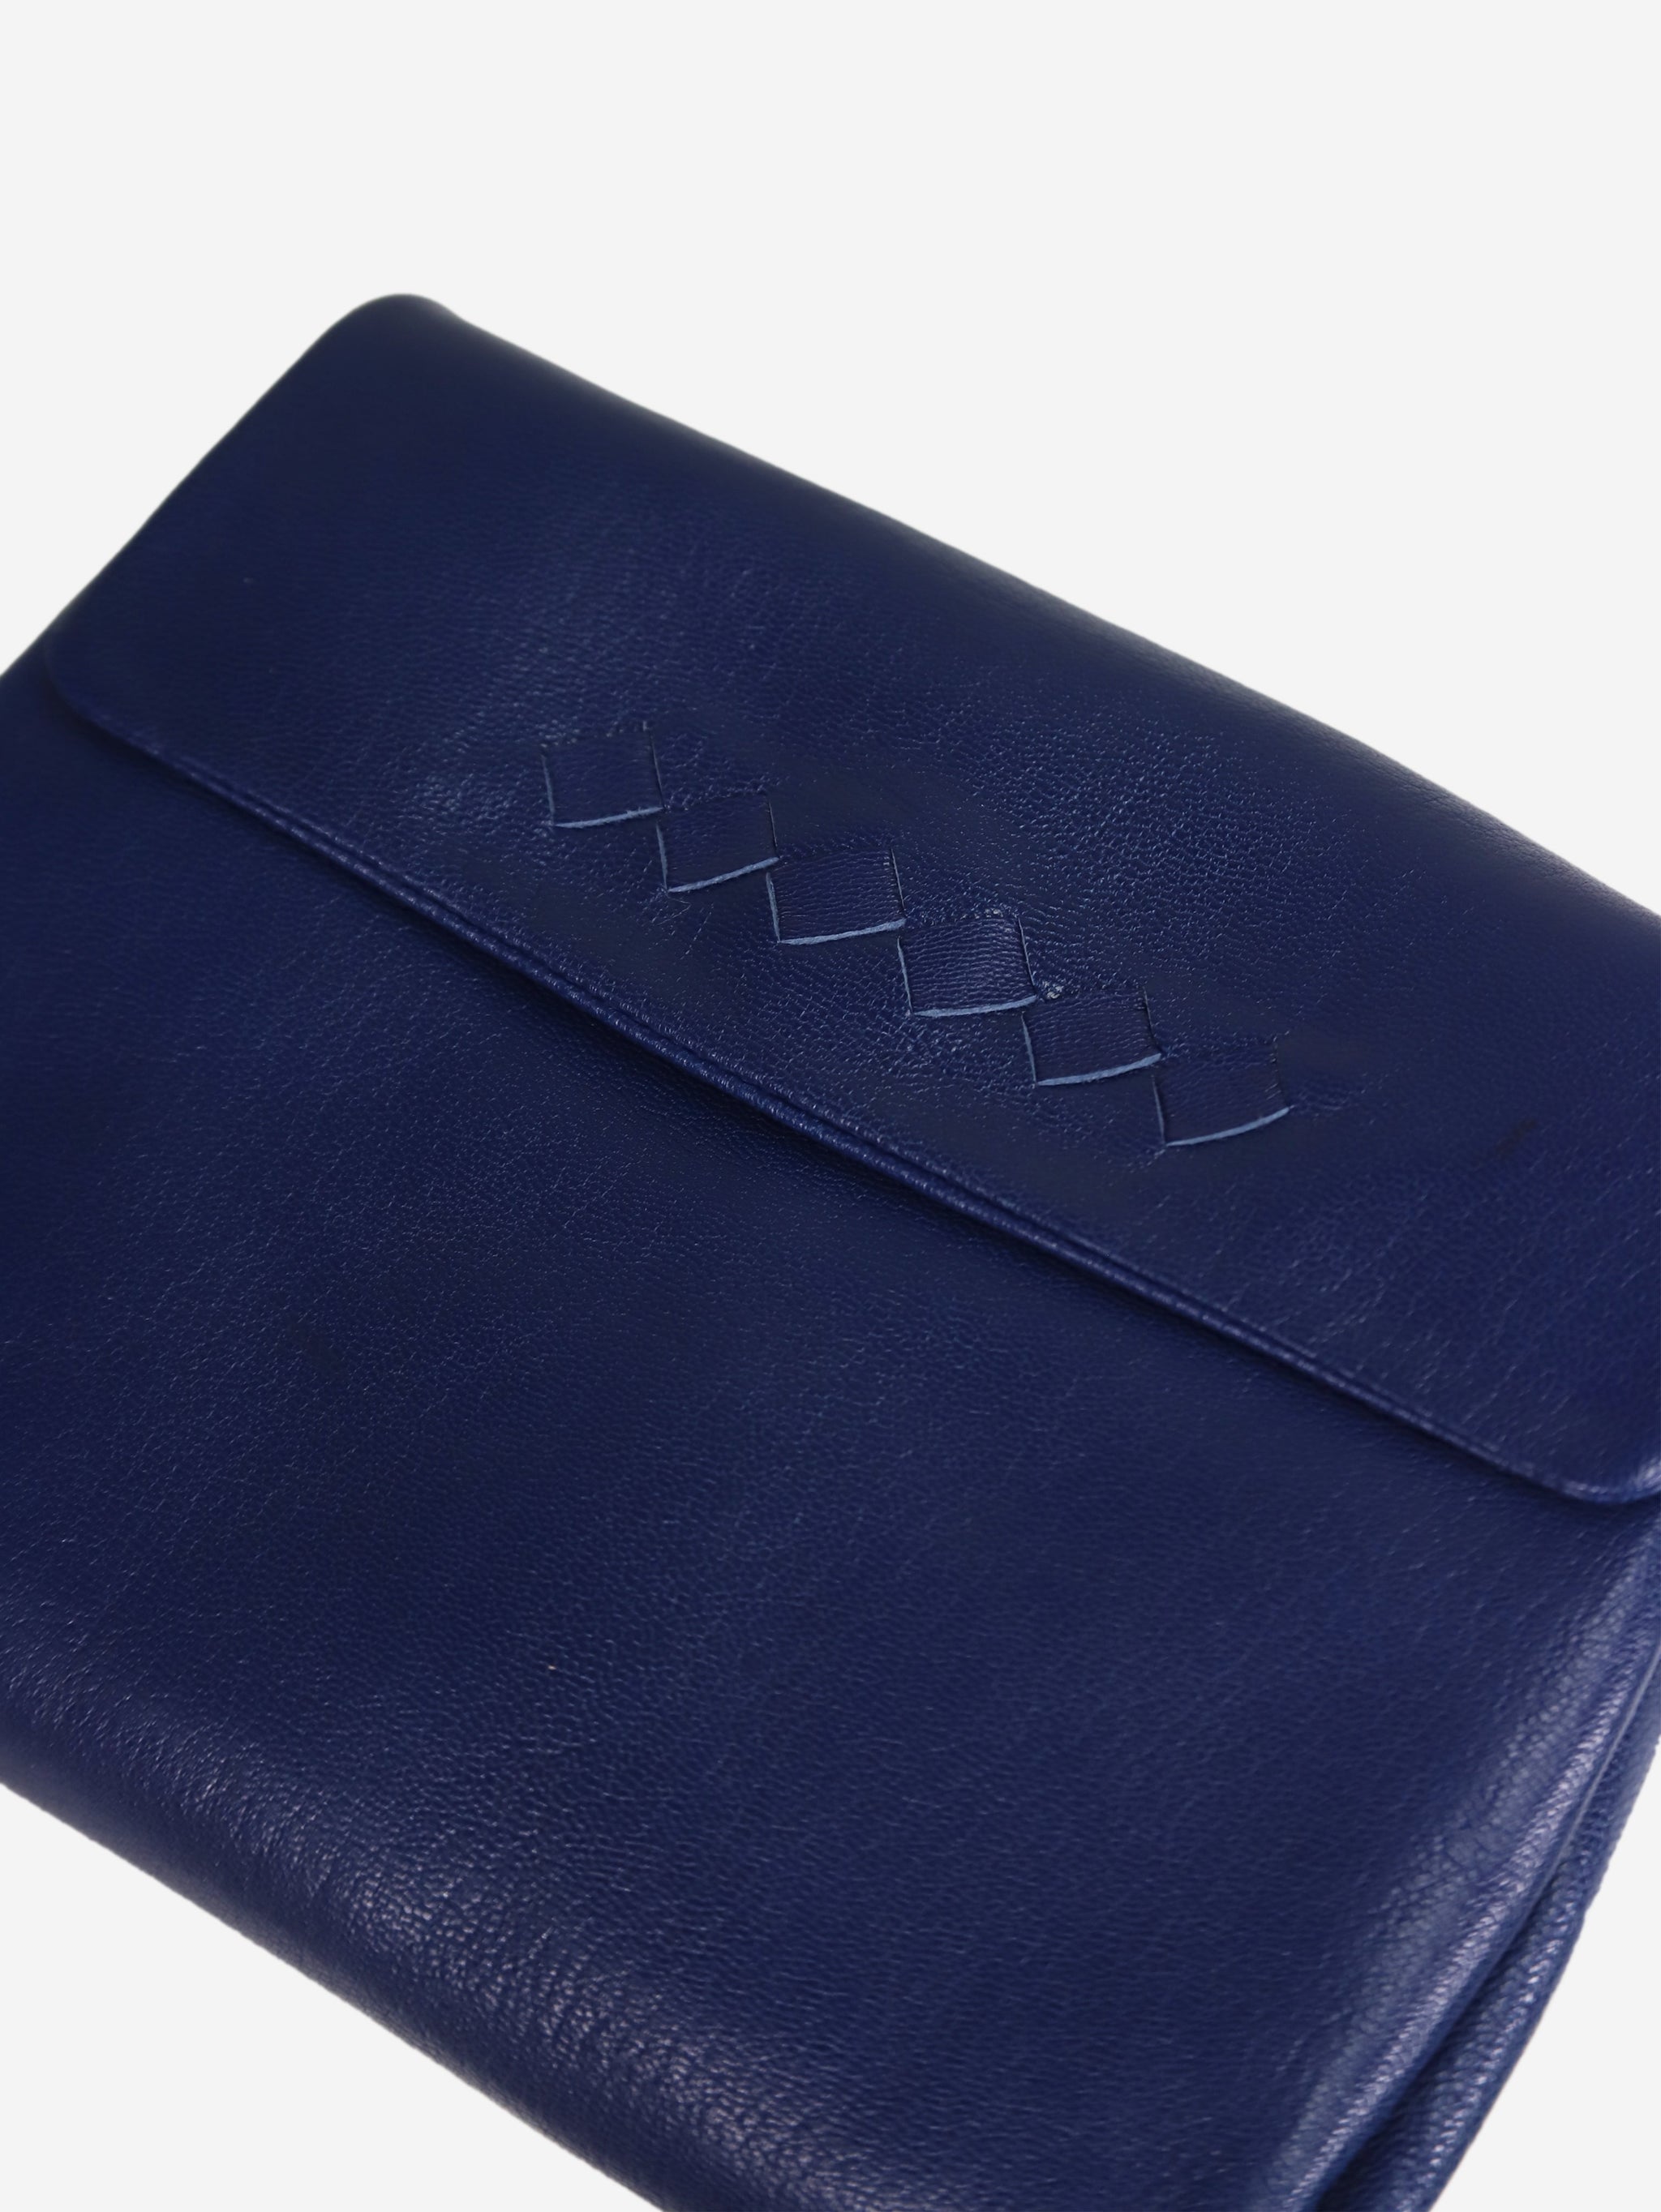 Bottega Veneta pre-owned dark blue leather clutch bag | Sign of the Times